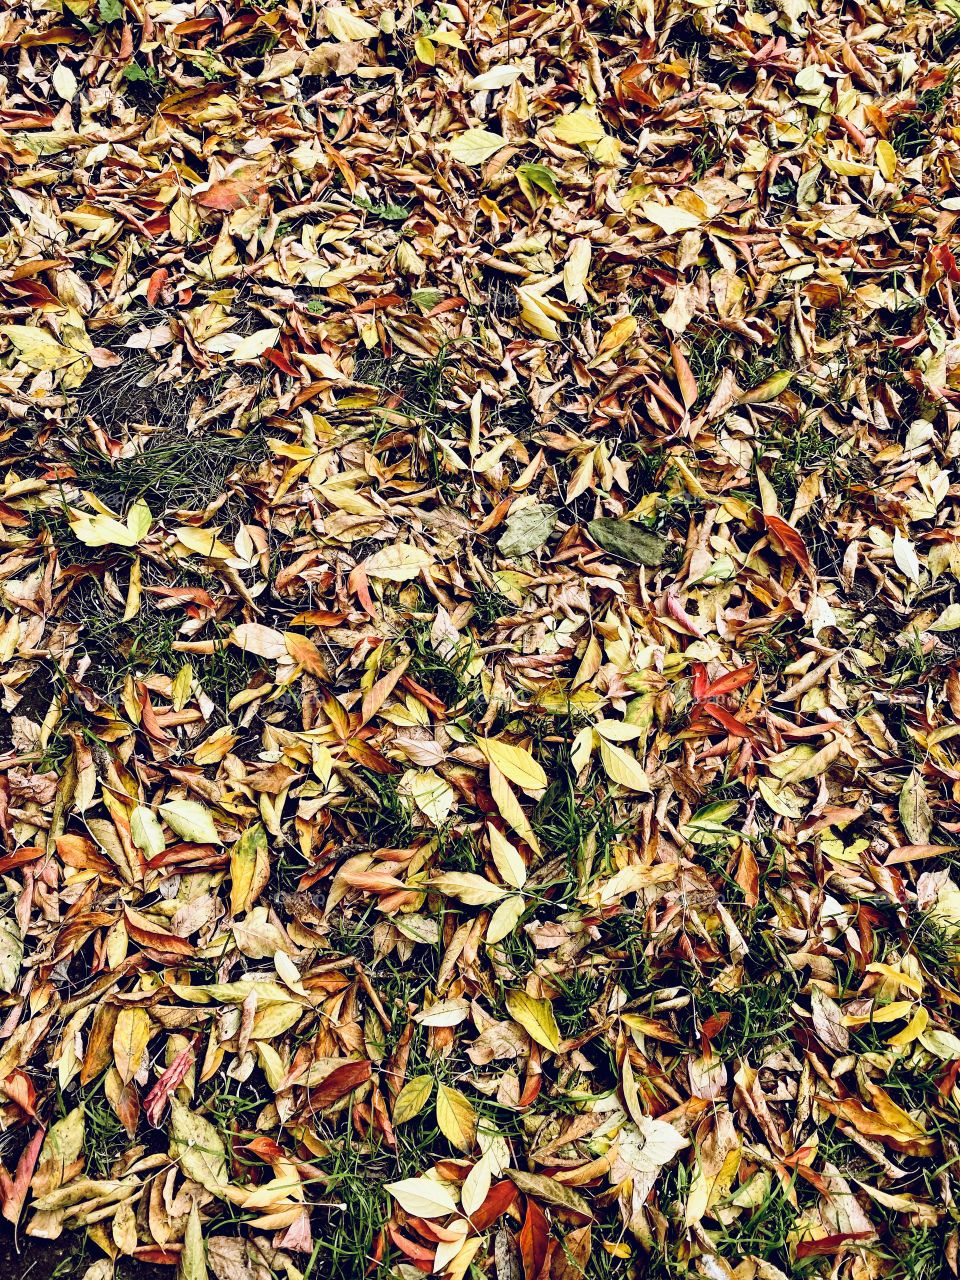 Fallen leafs on the grass